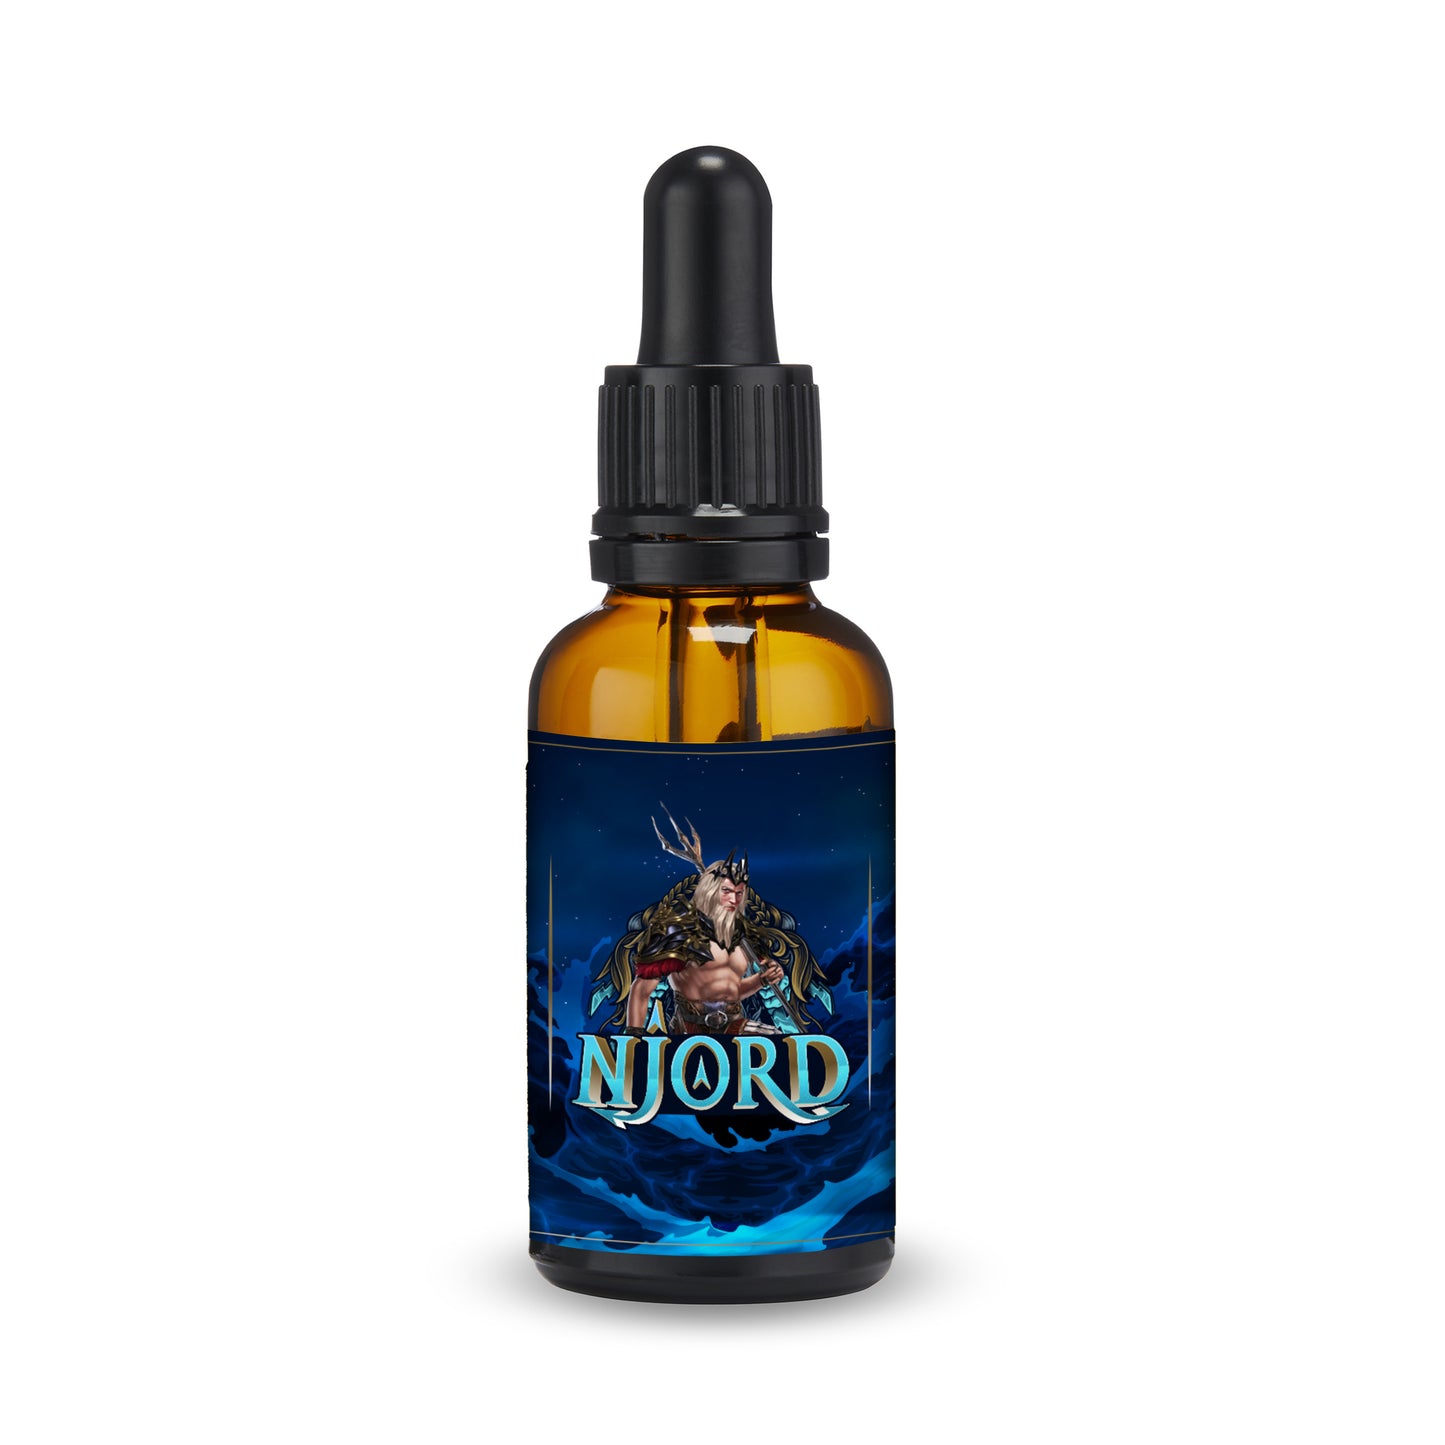 Njord Beard Oil - Spearmint, Mandarin, Ocean, Lilly, Sea Moss, Spices & Vanilla 30 ml